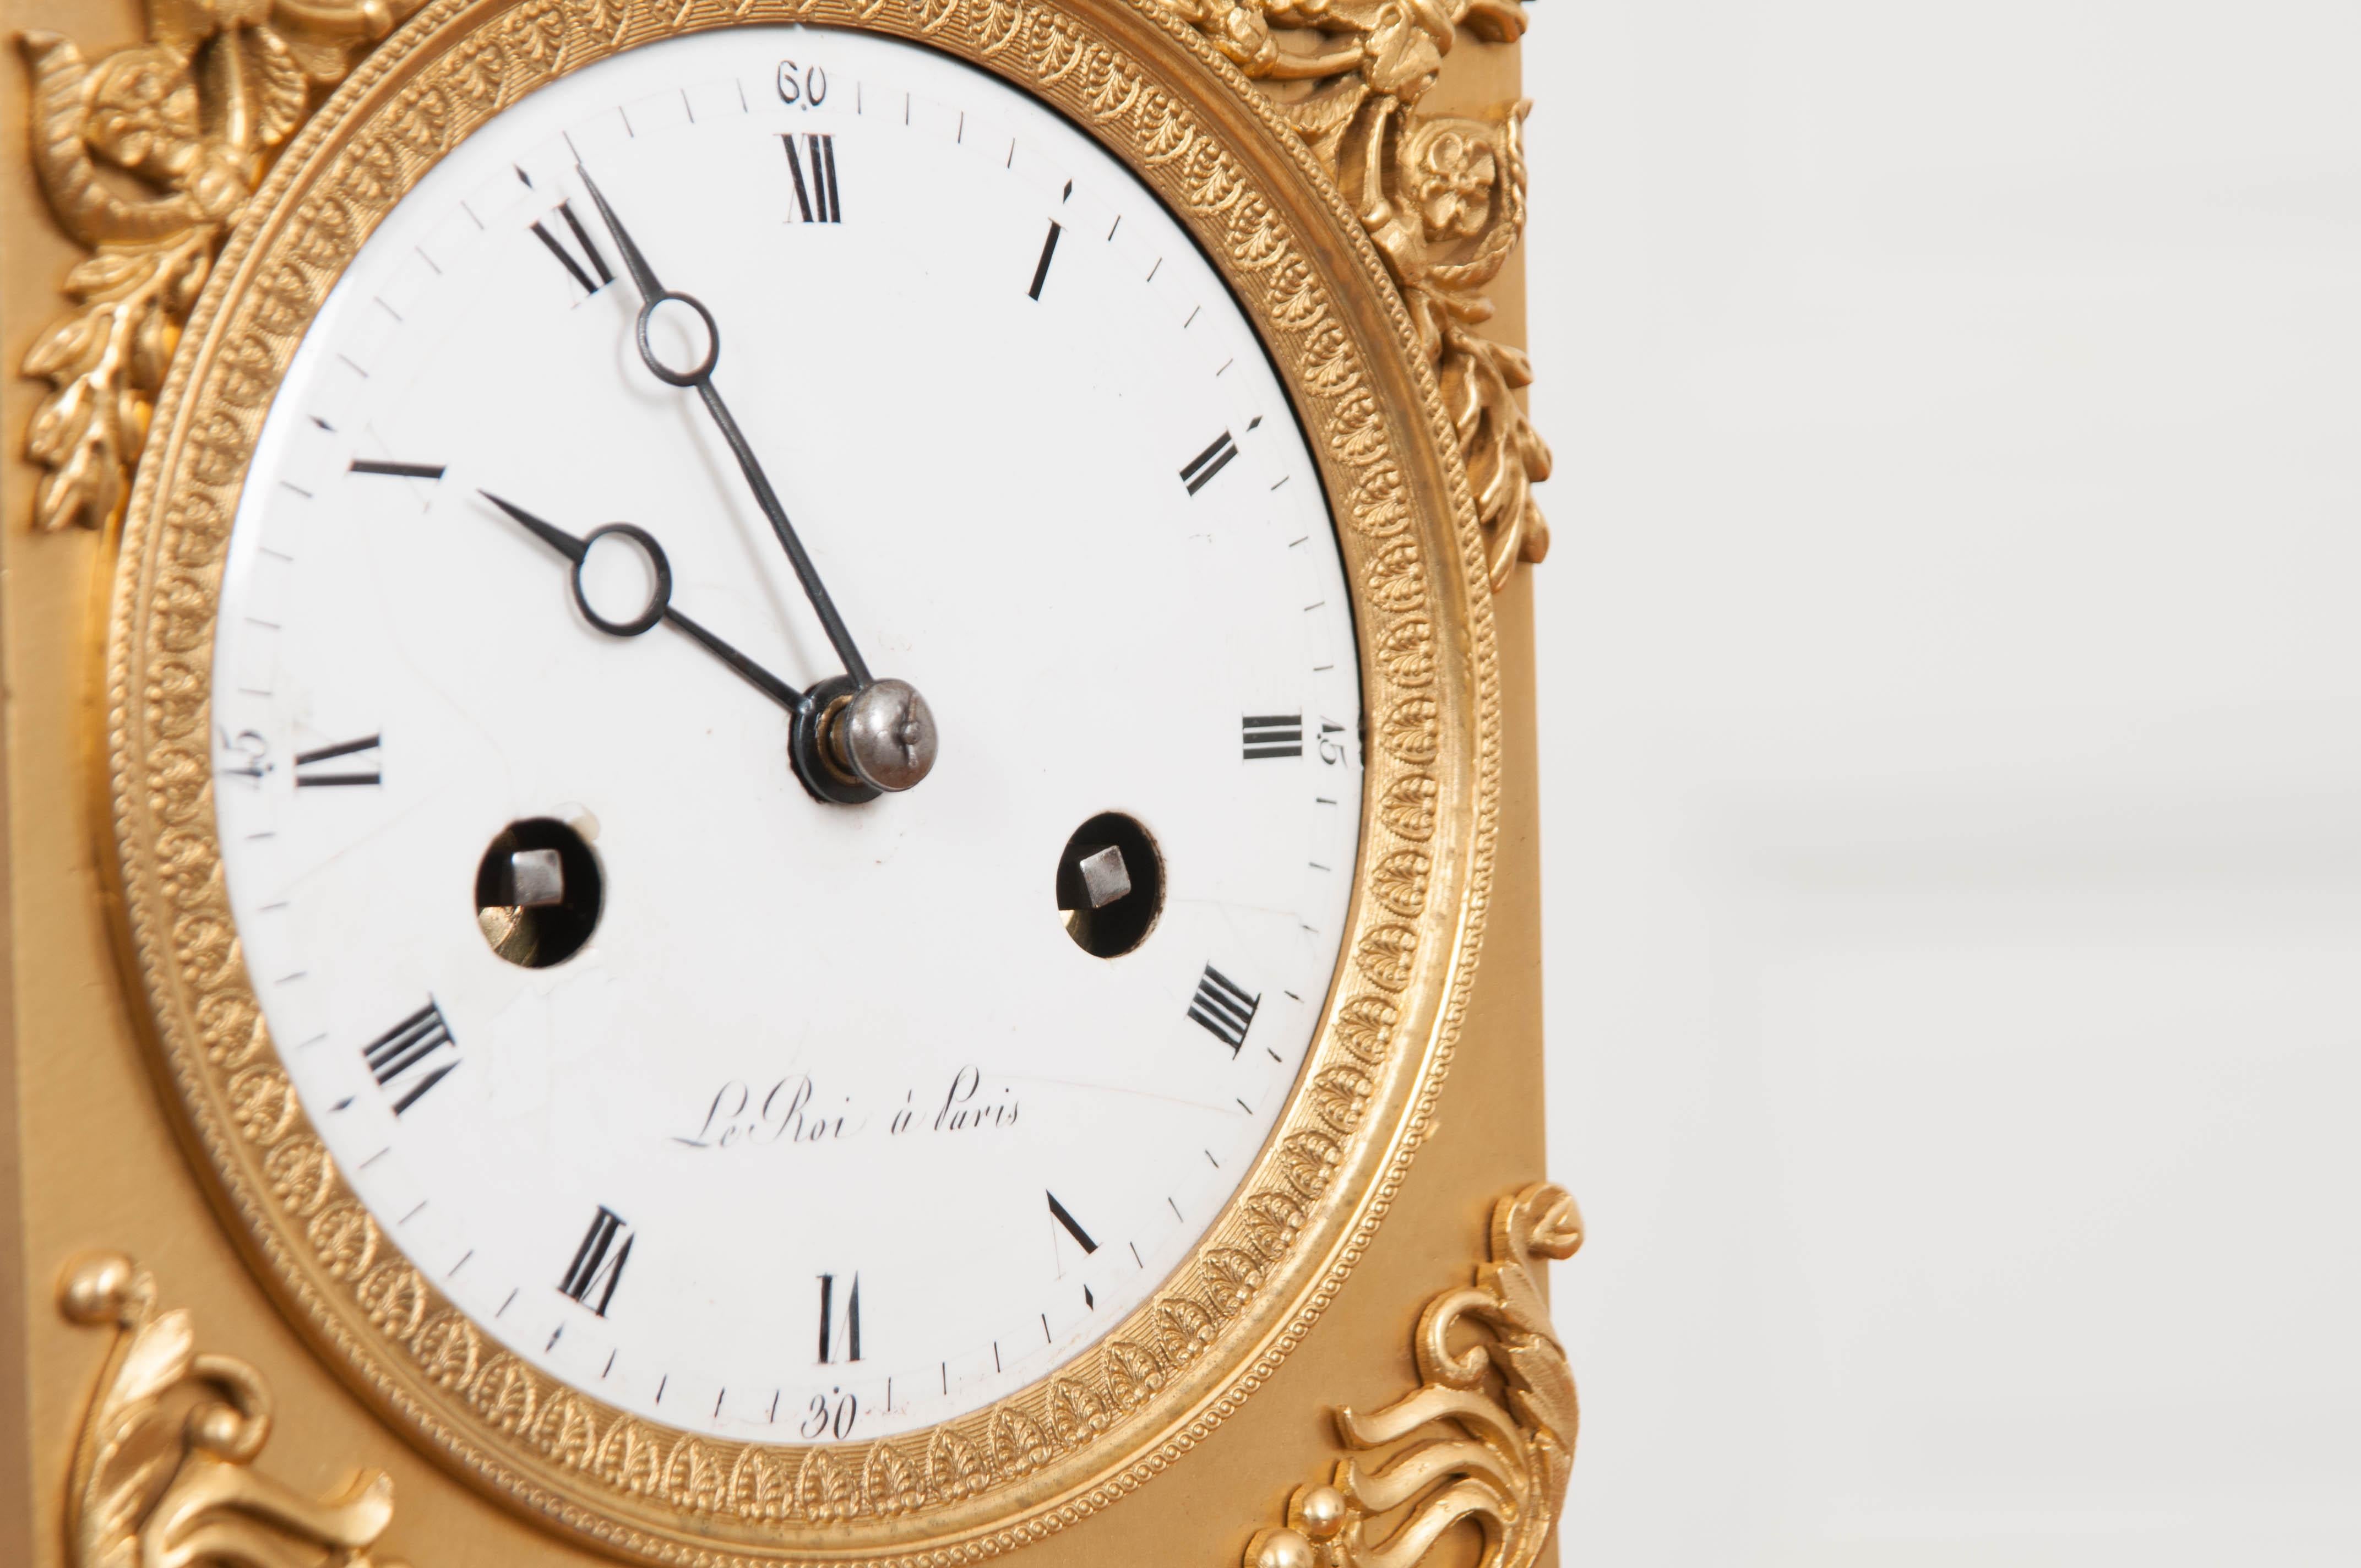 French Late 18th Century Le Roi à Paris Fire-Gilded Bronze Mantel Clock